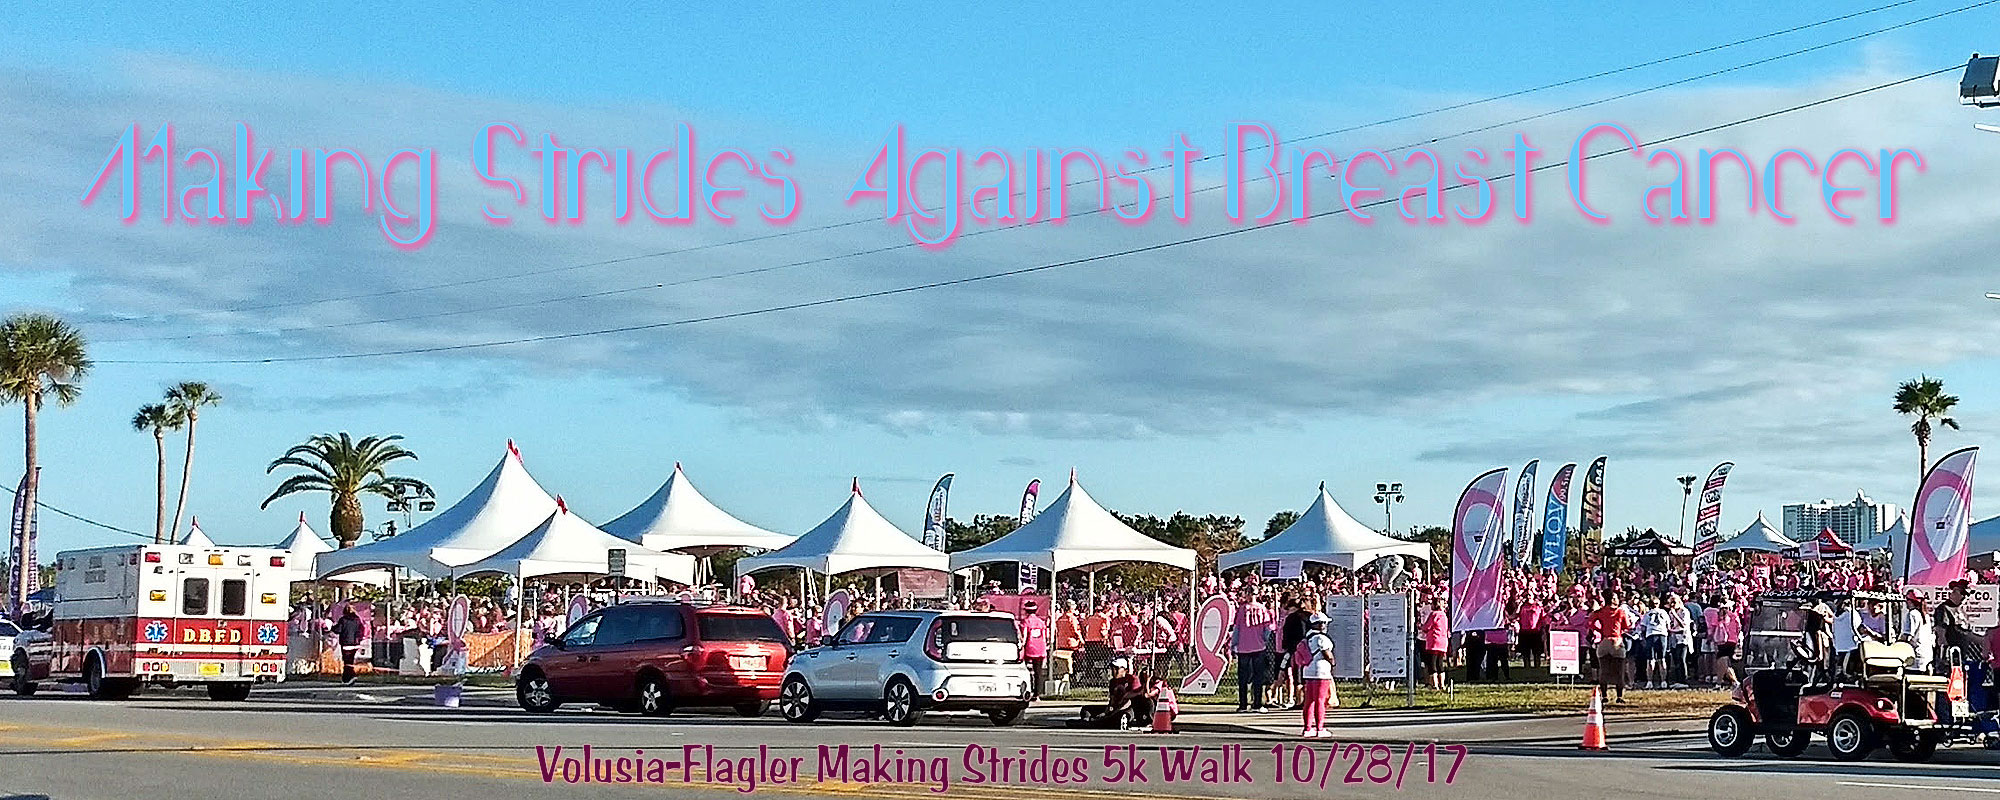 Making Strides Walk for Breast Cancer 2017